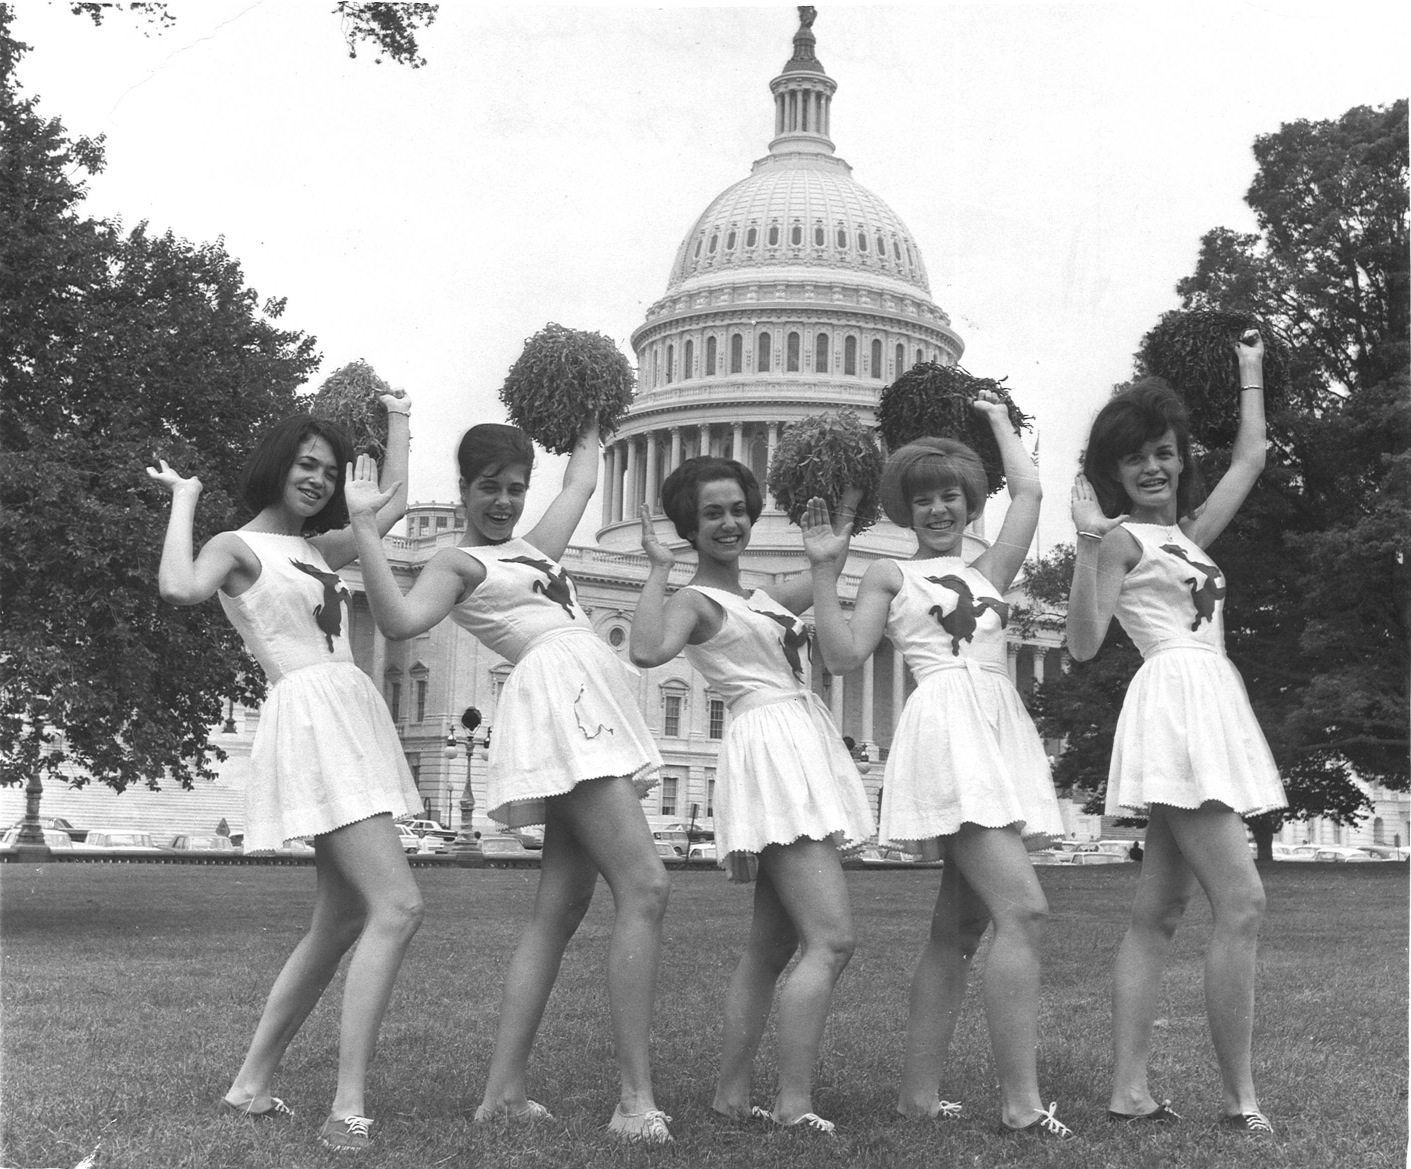 PHOTO: Democrat Cheerleaders show their spirit before the Congressional Baseball Game, July 1966.